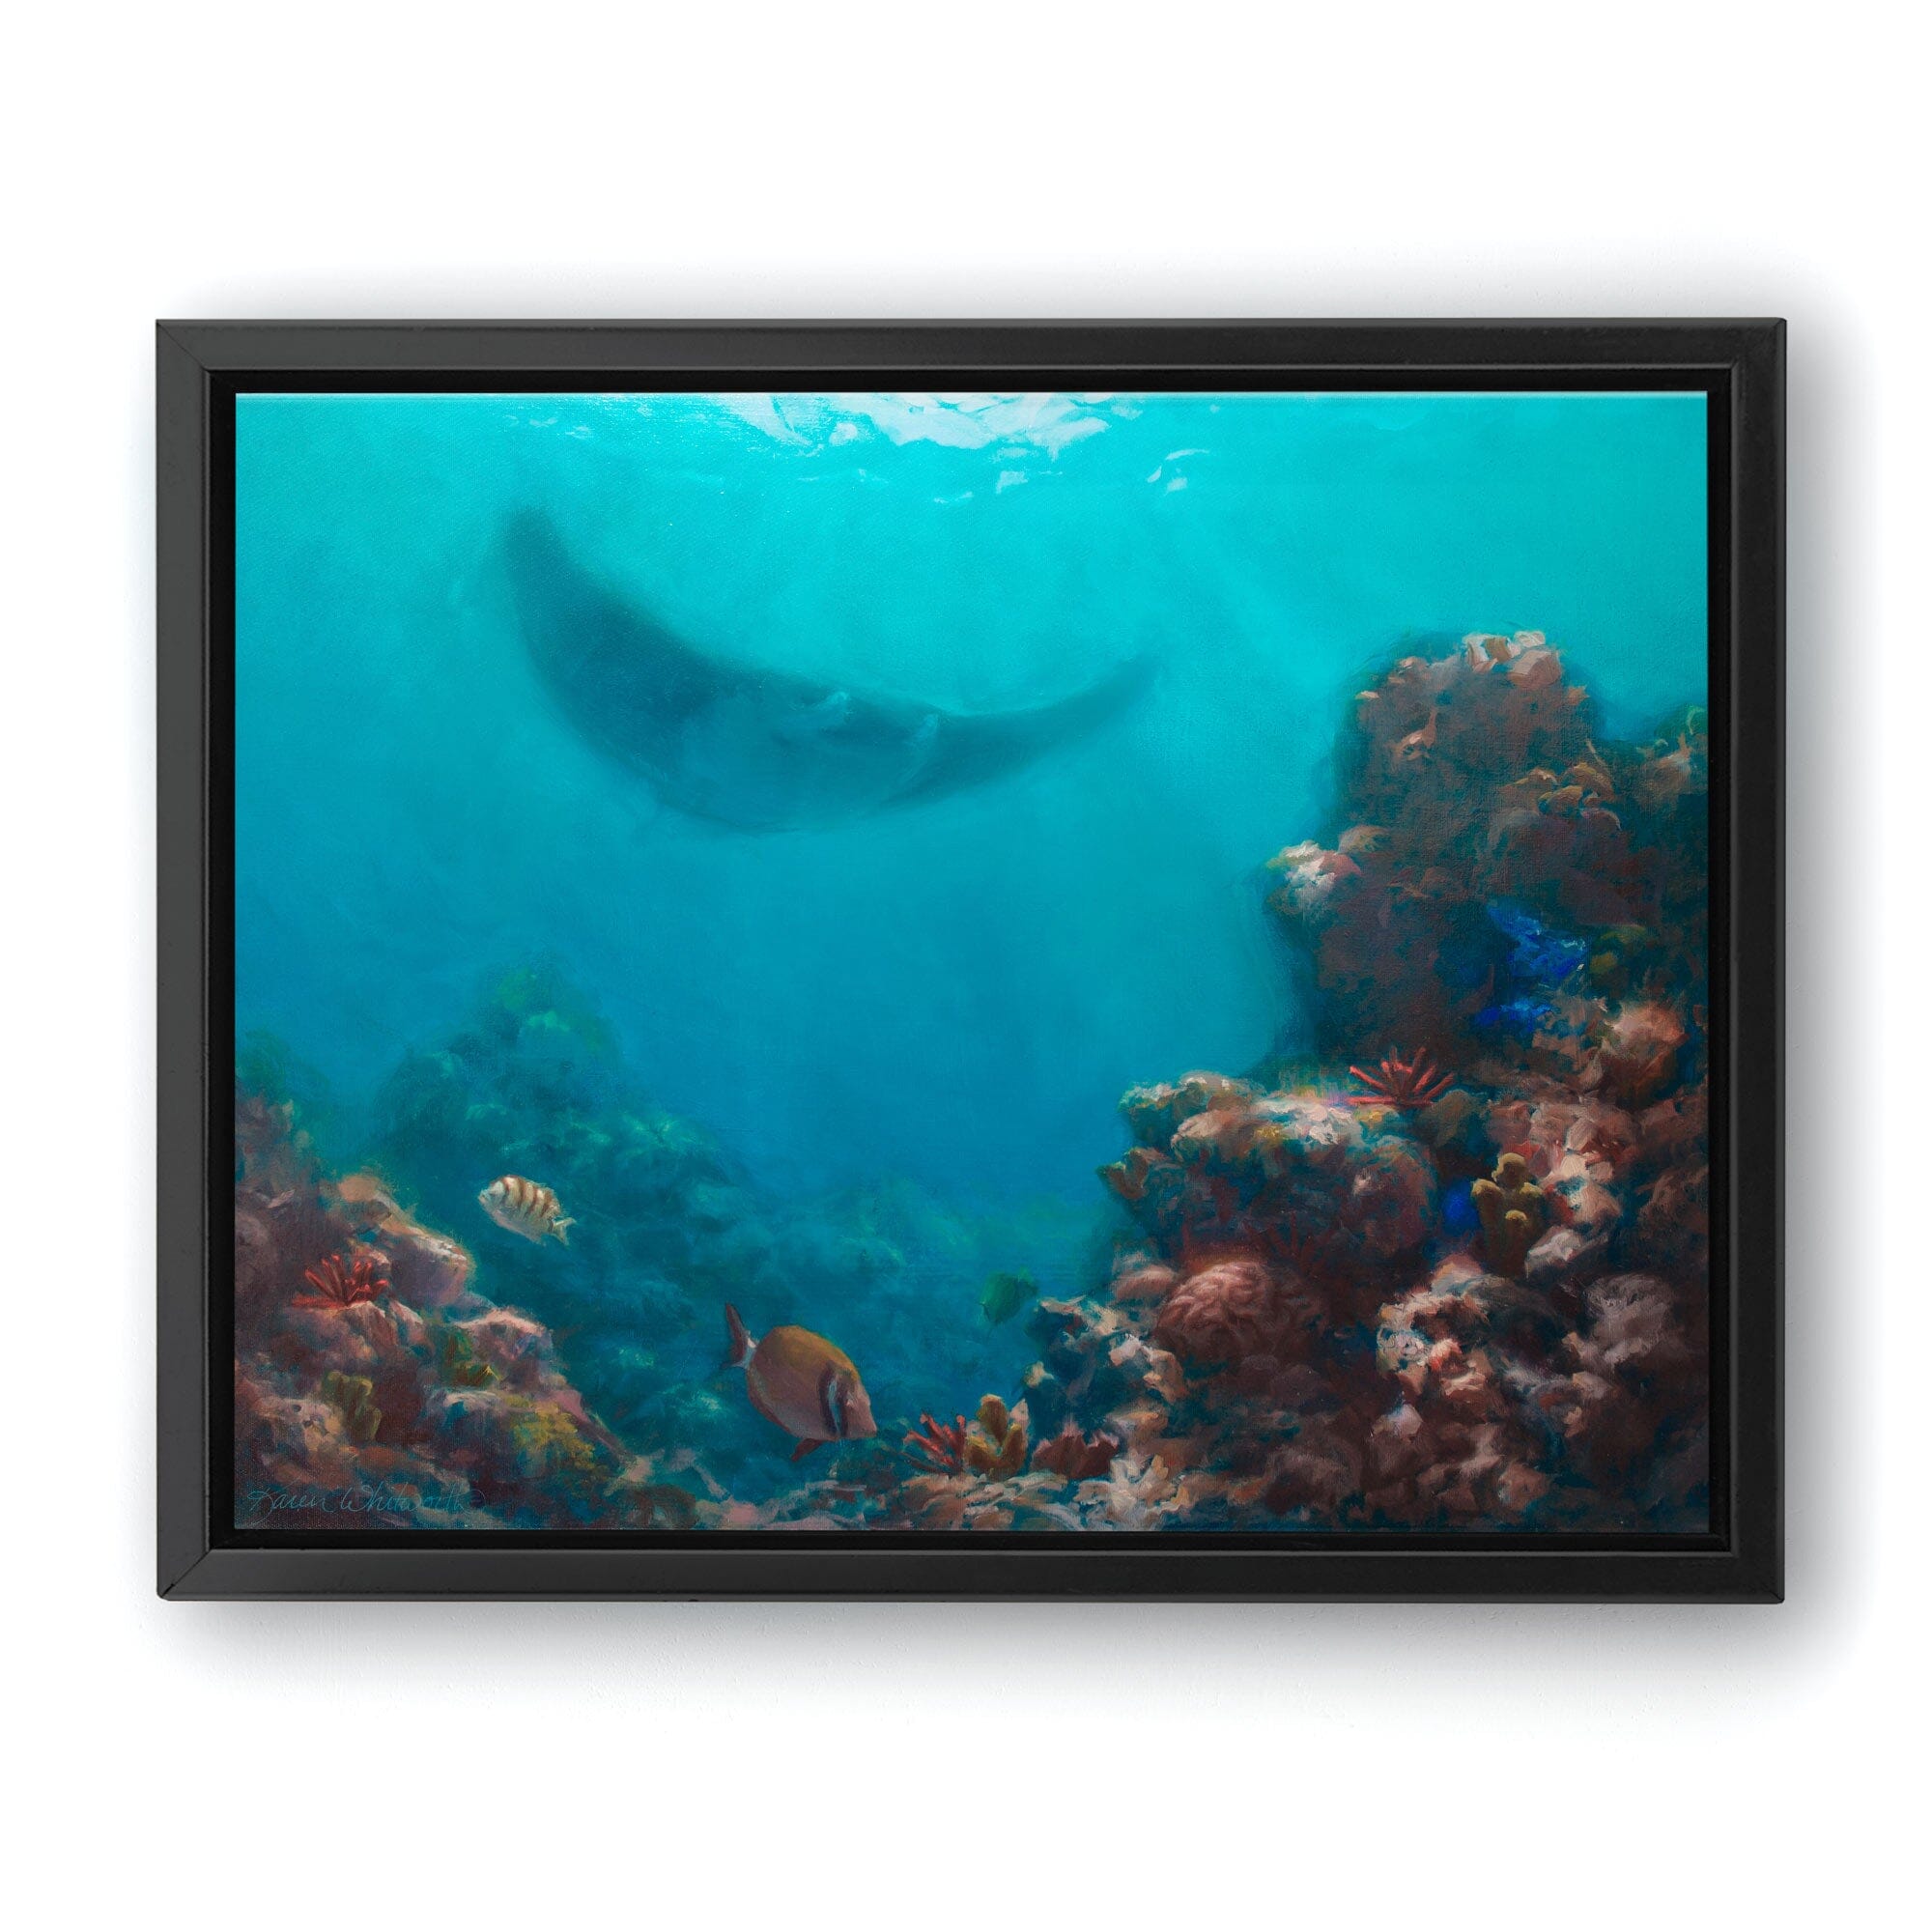 Manta Ray Canvas Wall Art Print - Underwater Ocean Painting of